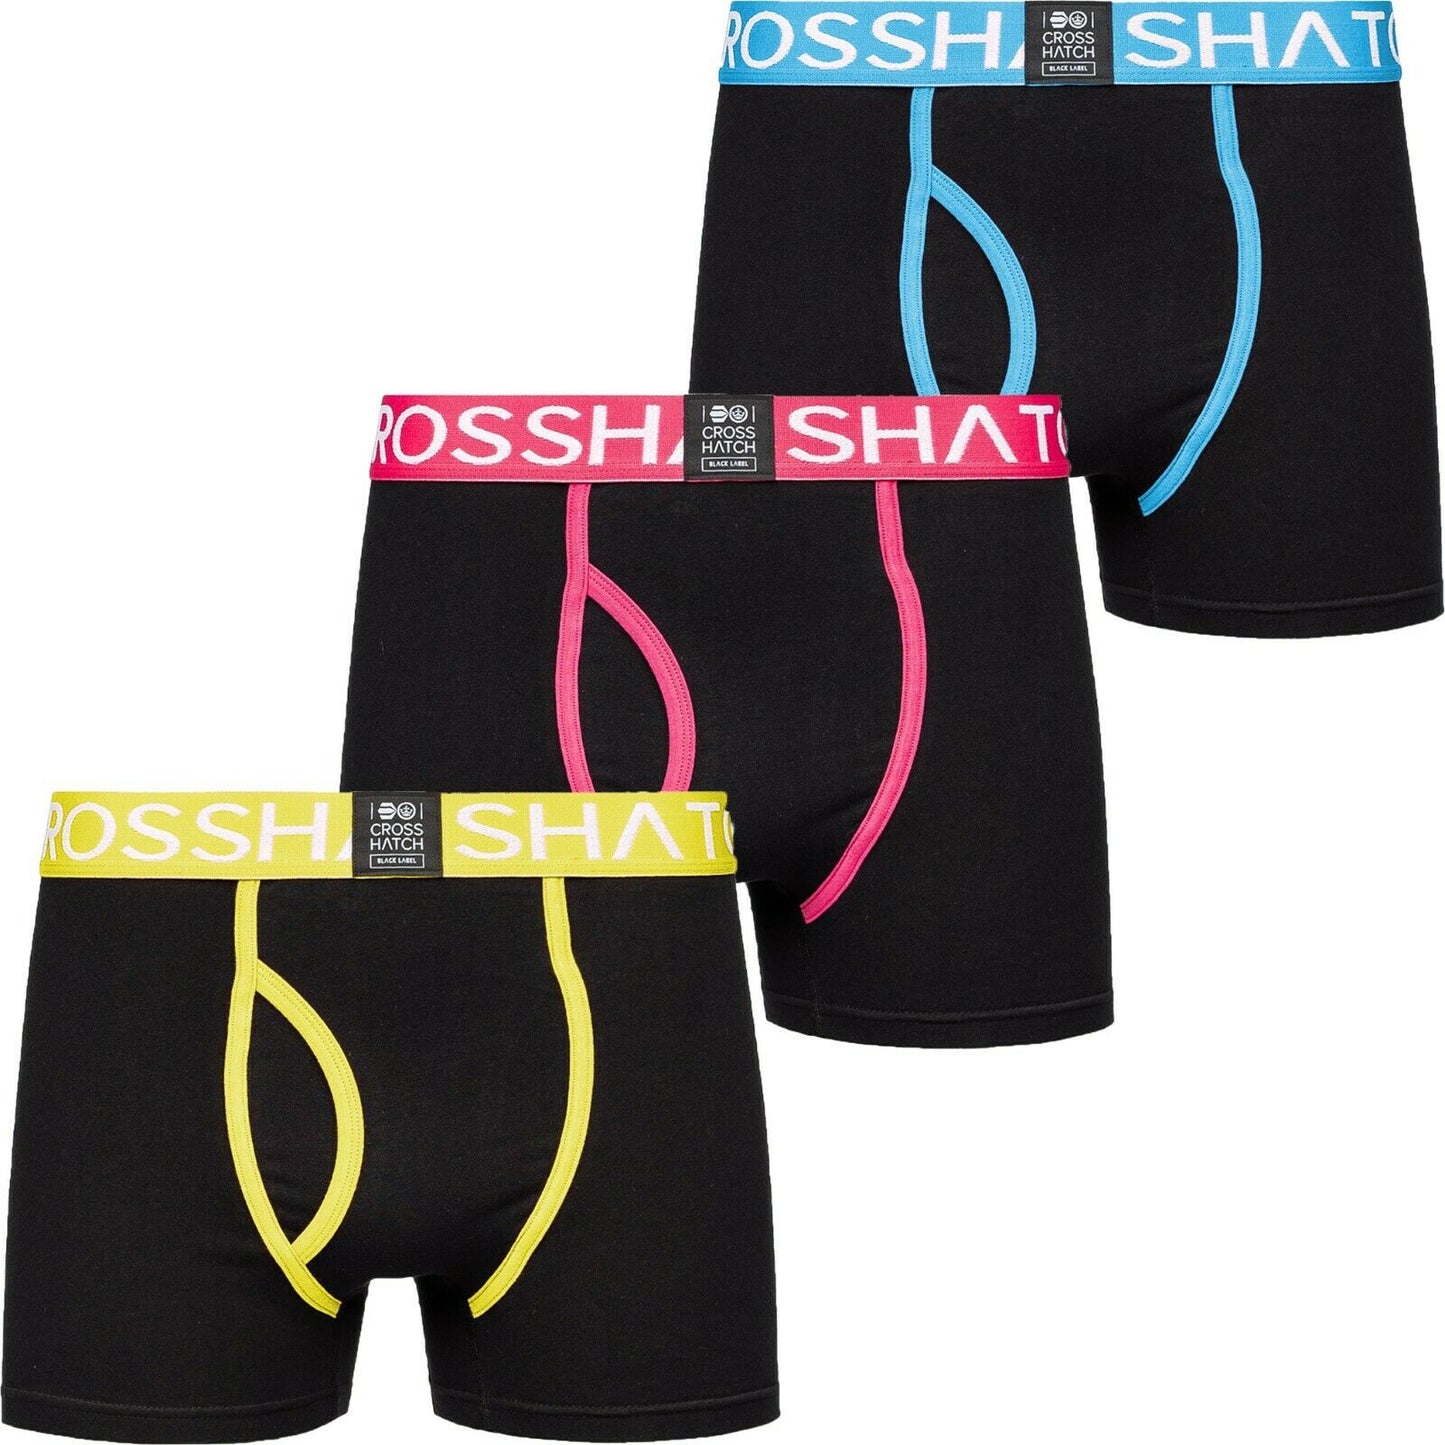 Crosshatch - Men's Black Boxer Shorts 3 Pack